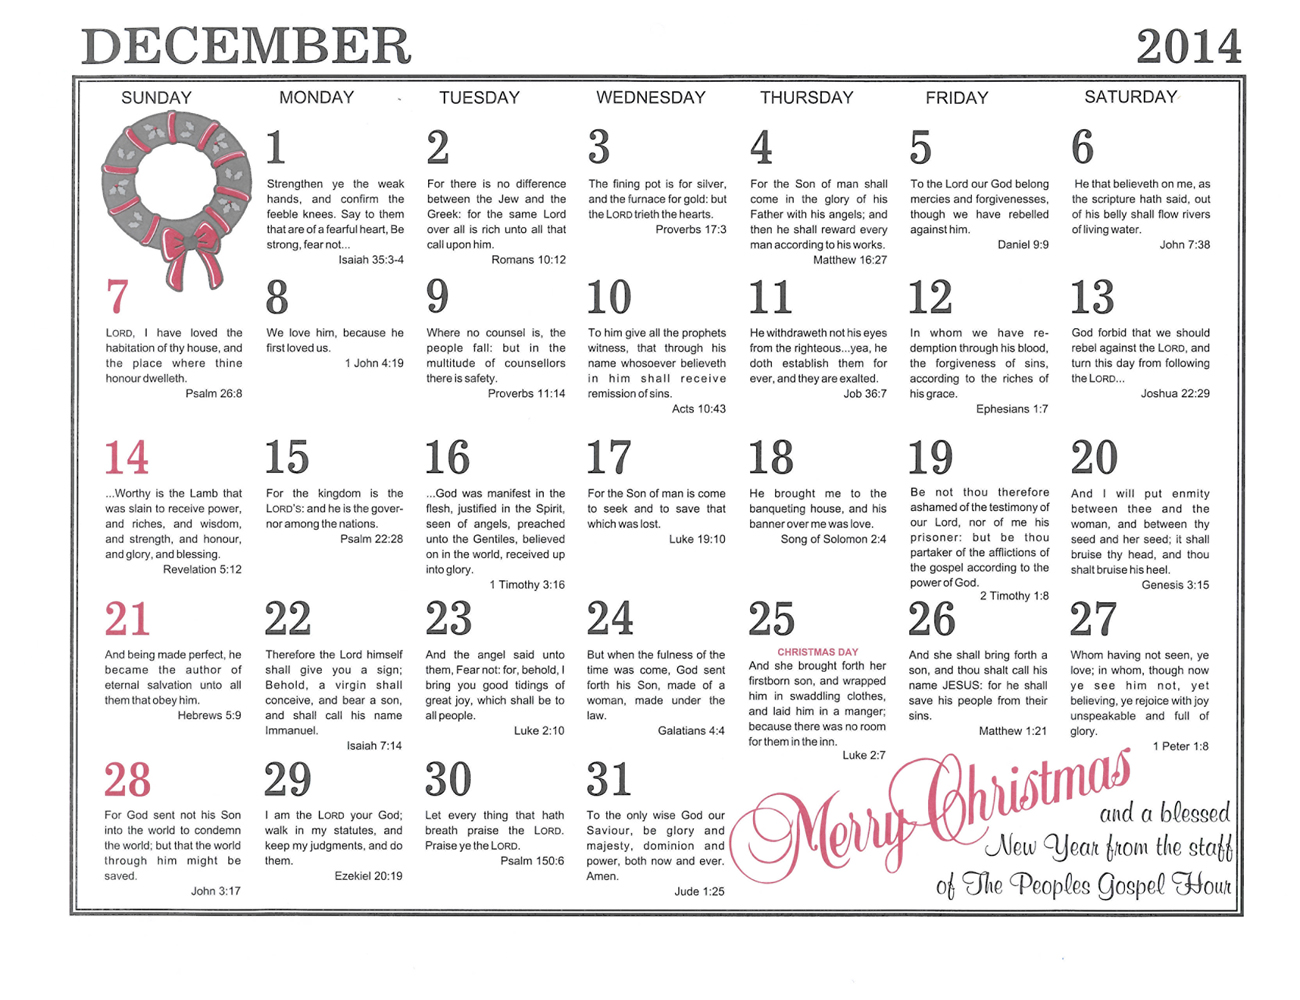 December: 2014 The Peoples Gospel Hour Calendar